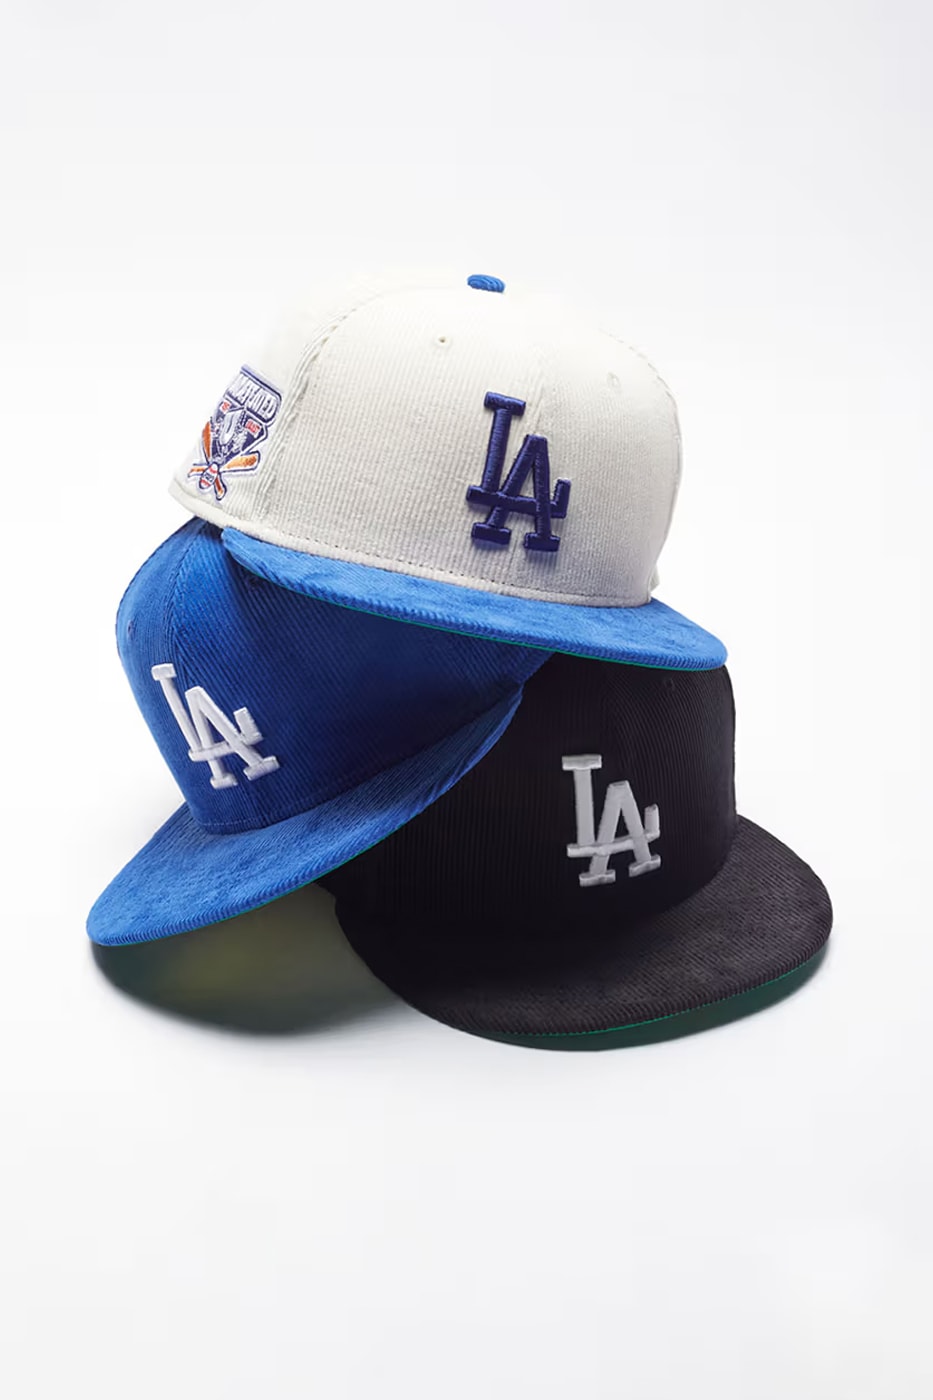 UNDEFEATED x Los Angeles Dodgers x New Era 59FIFTY 聯乘系列帽款發佈